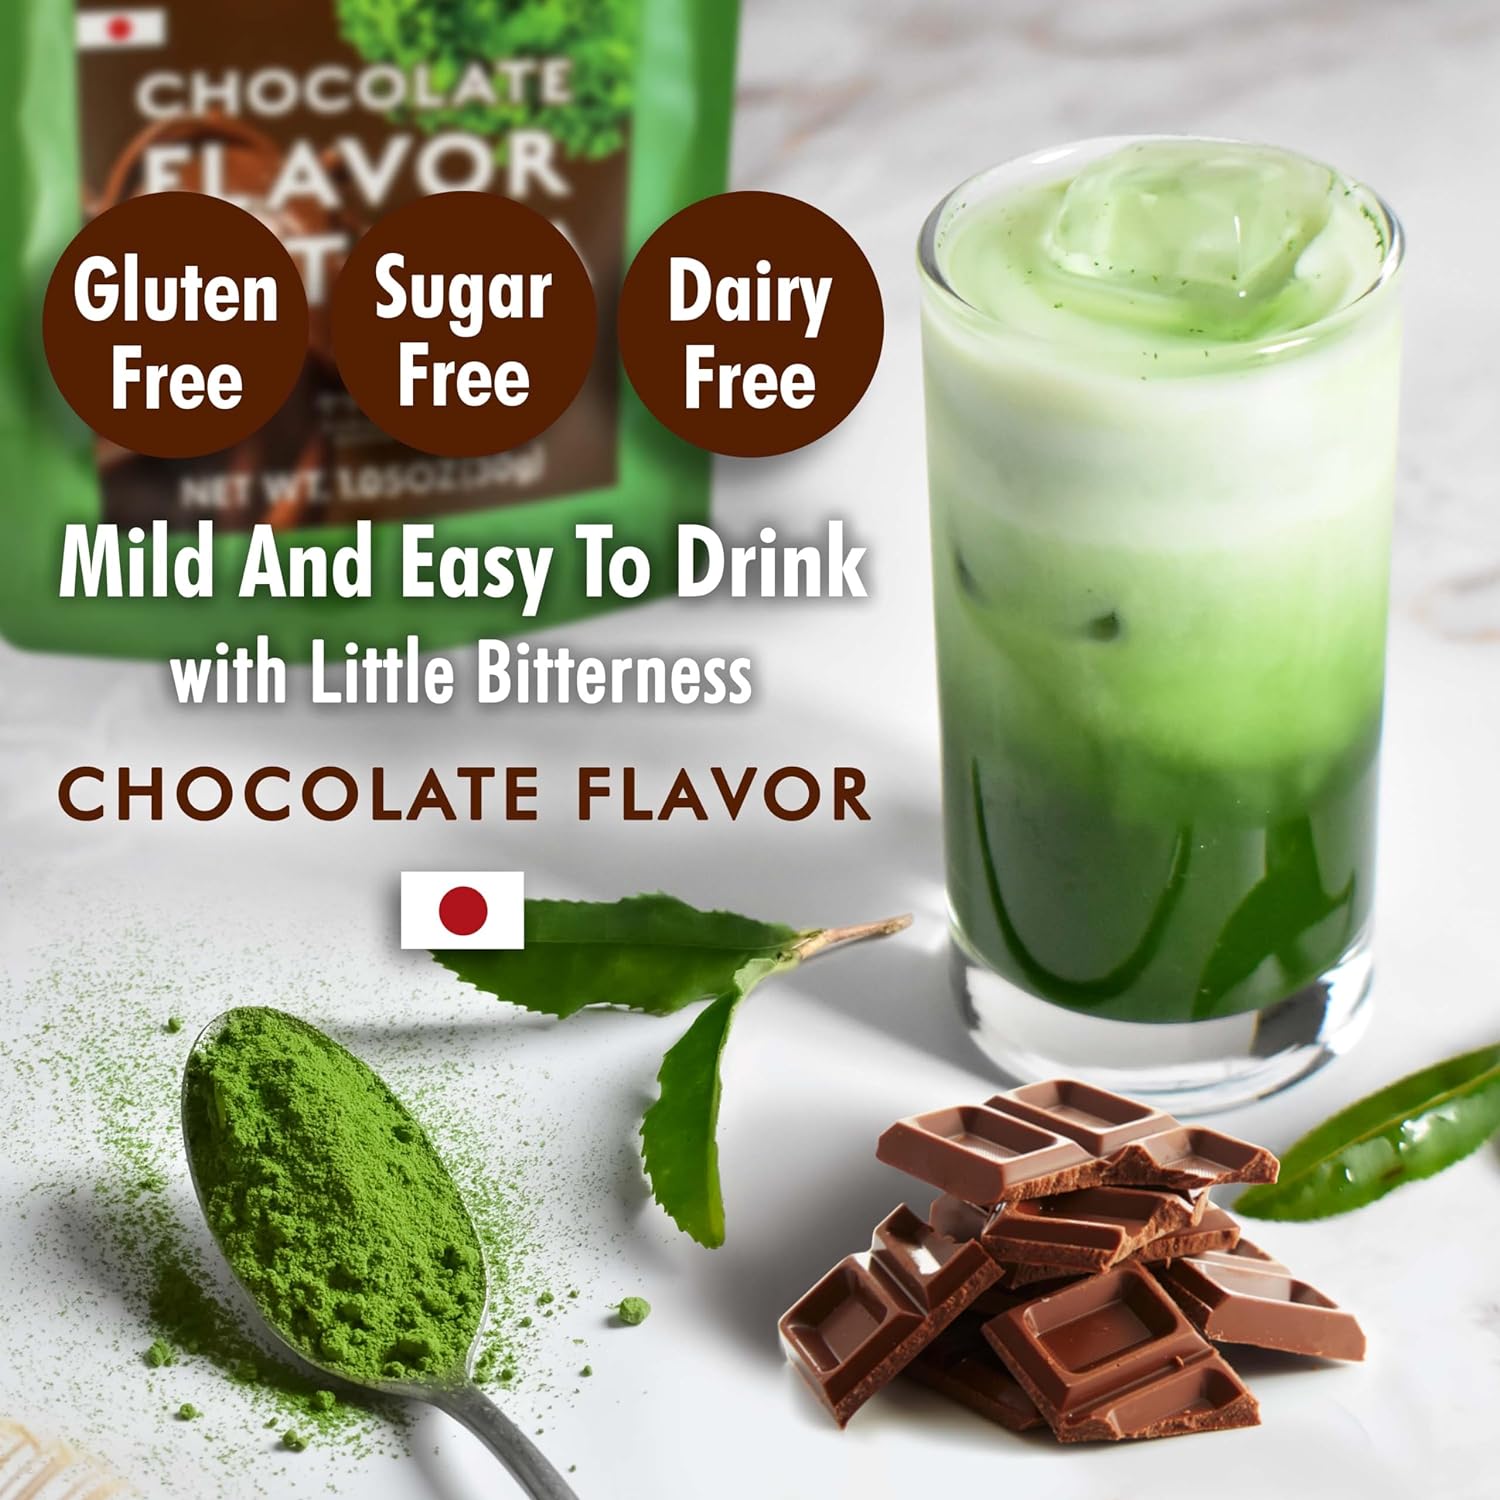 Japanese Matcha Green Tea Powder Chocolate Flavor